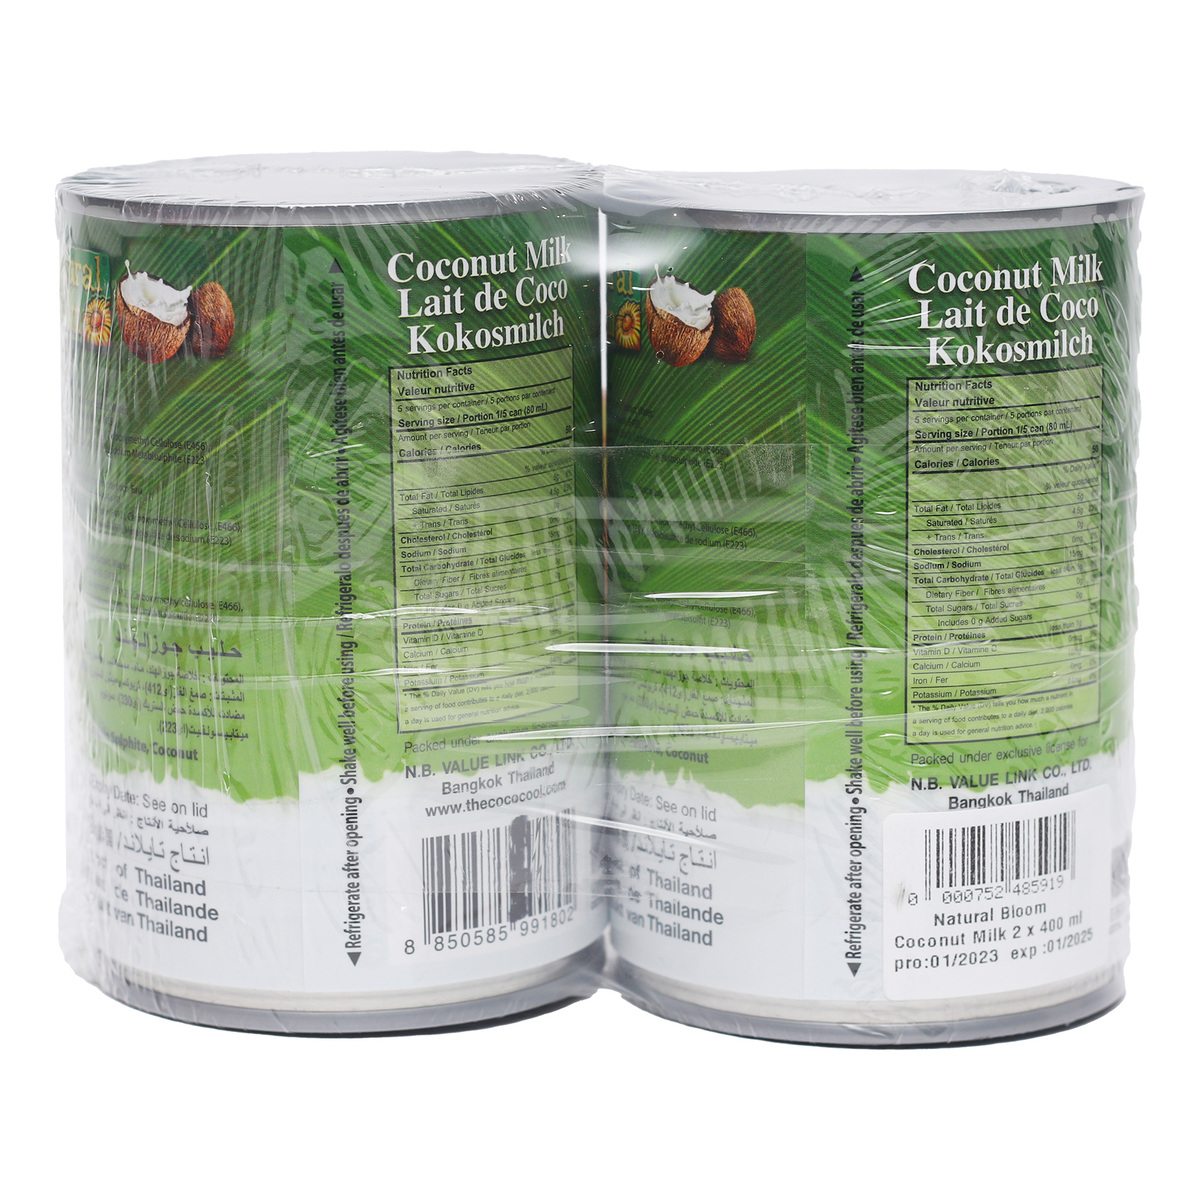 Natural Bloom Coconut Milk Value Pack 2 x 400 ml